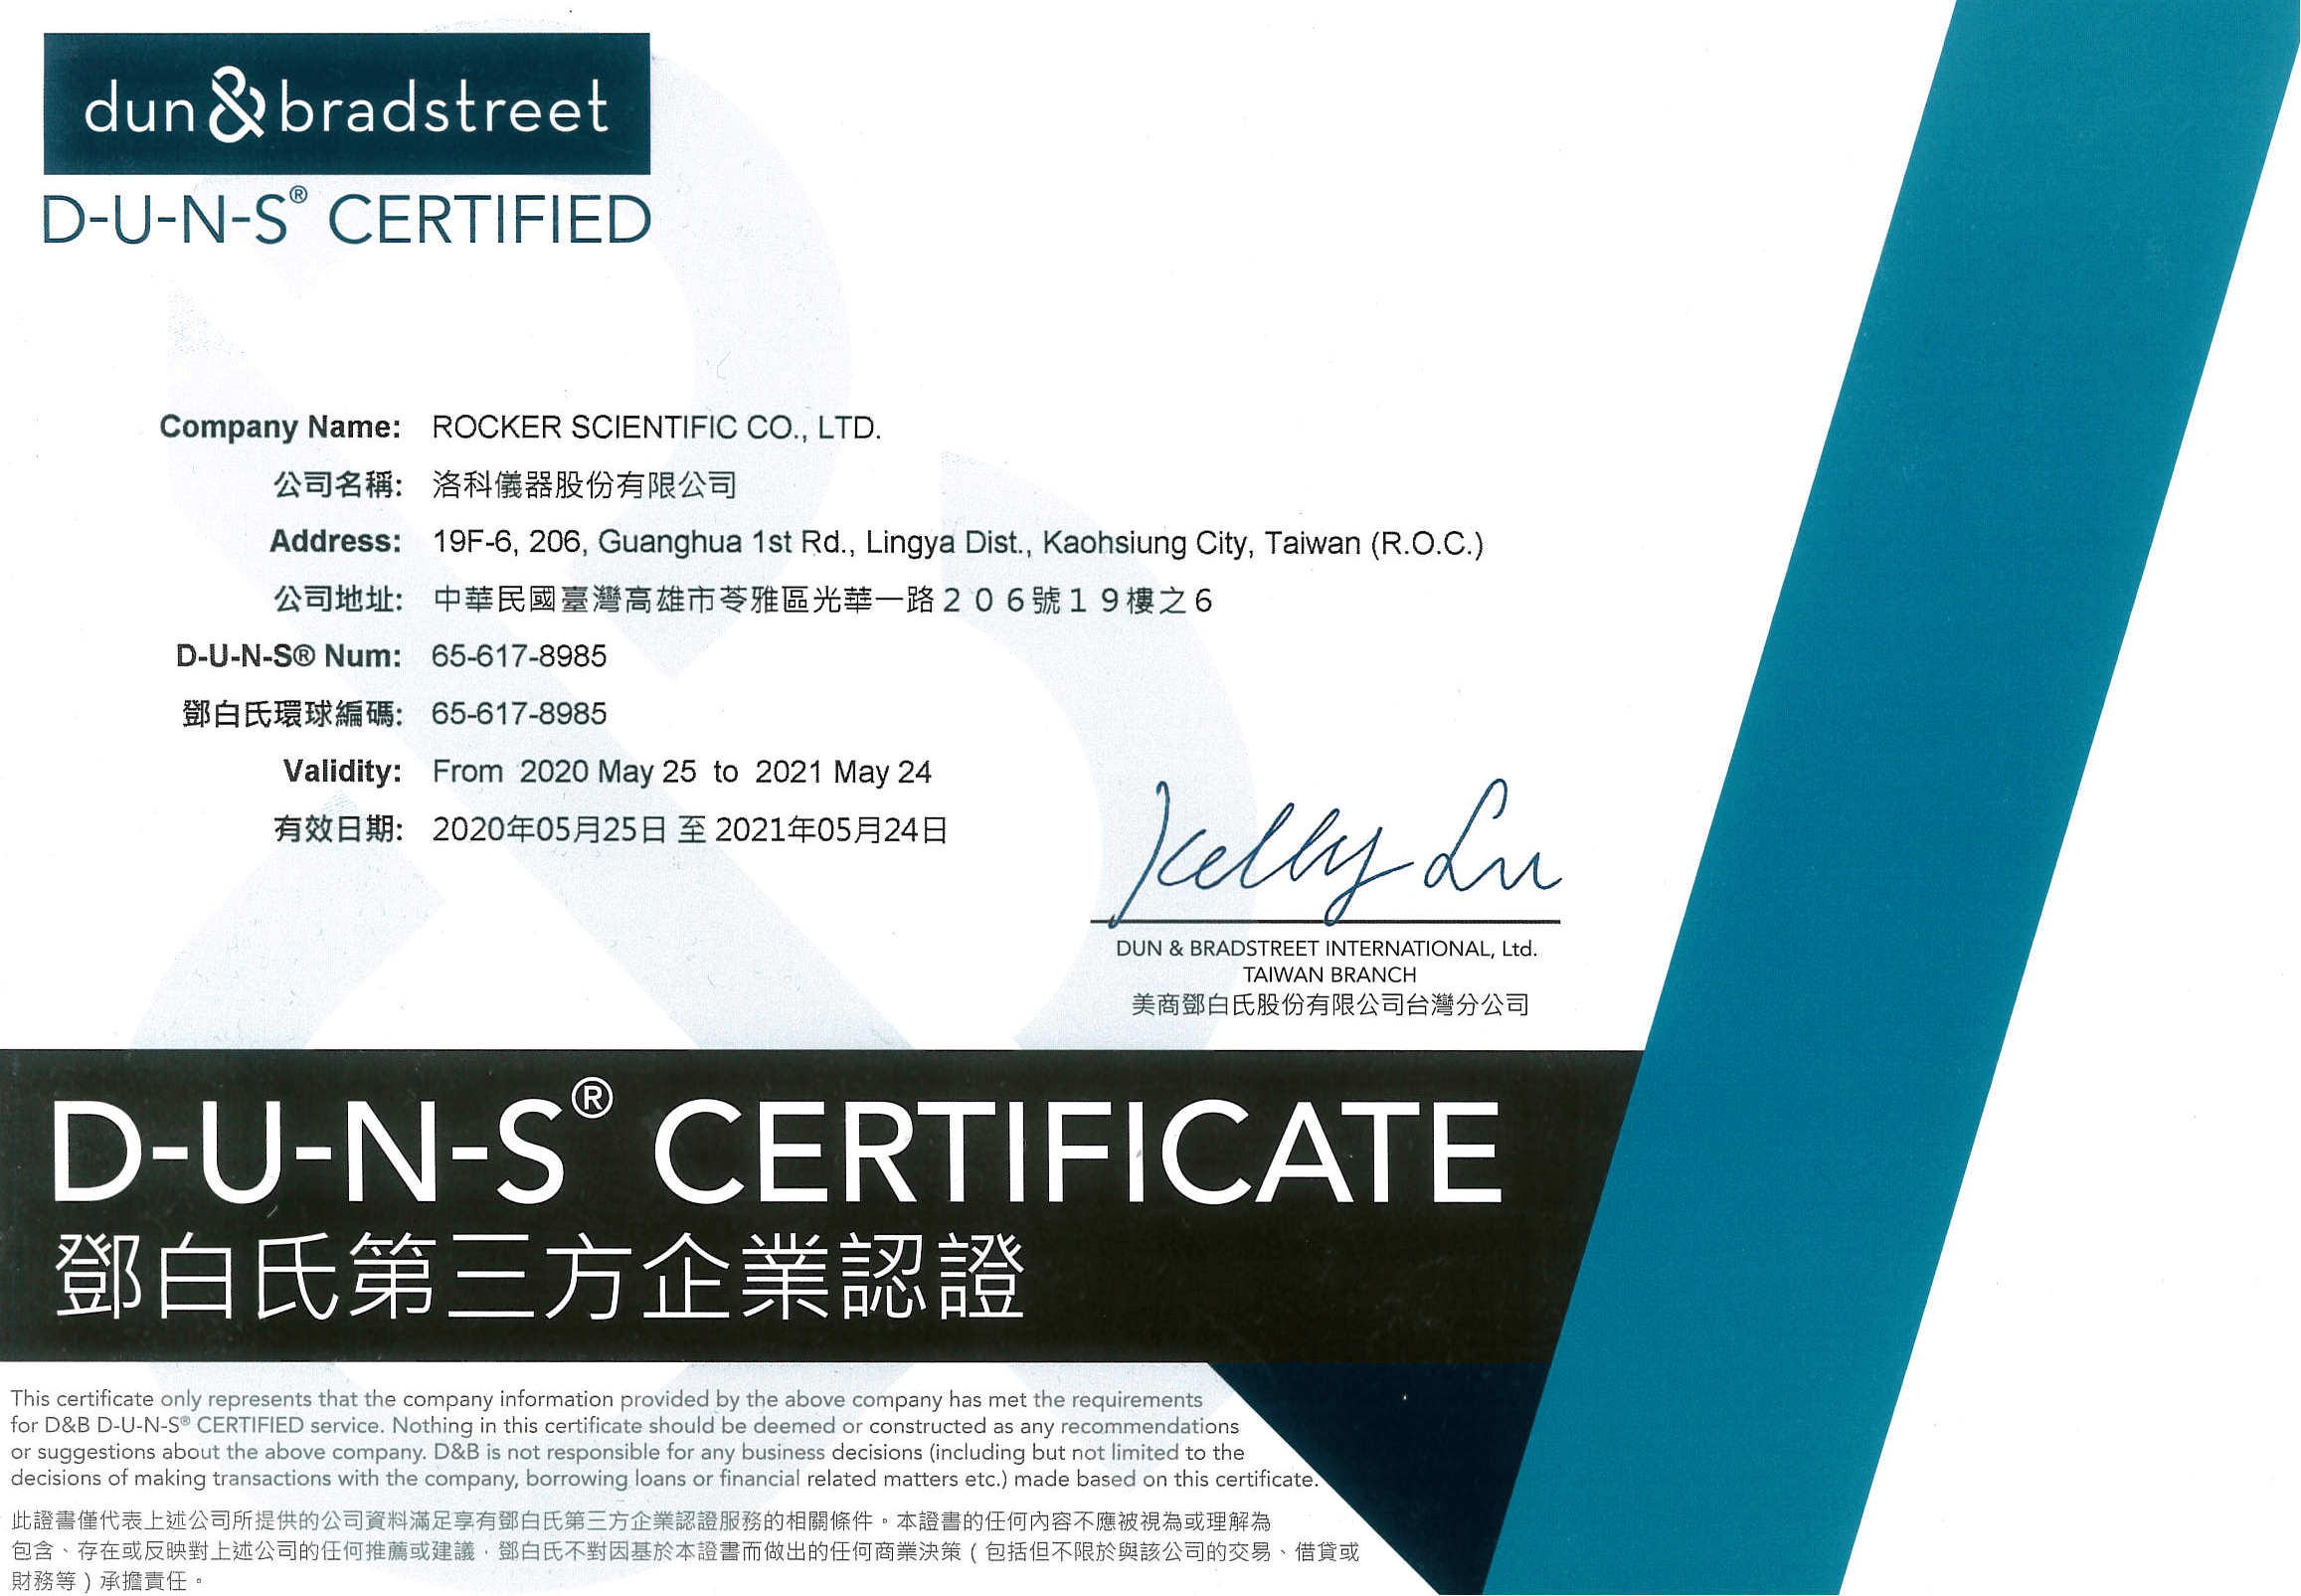 DUNS Certified